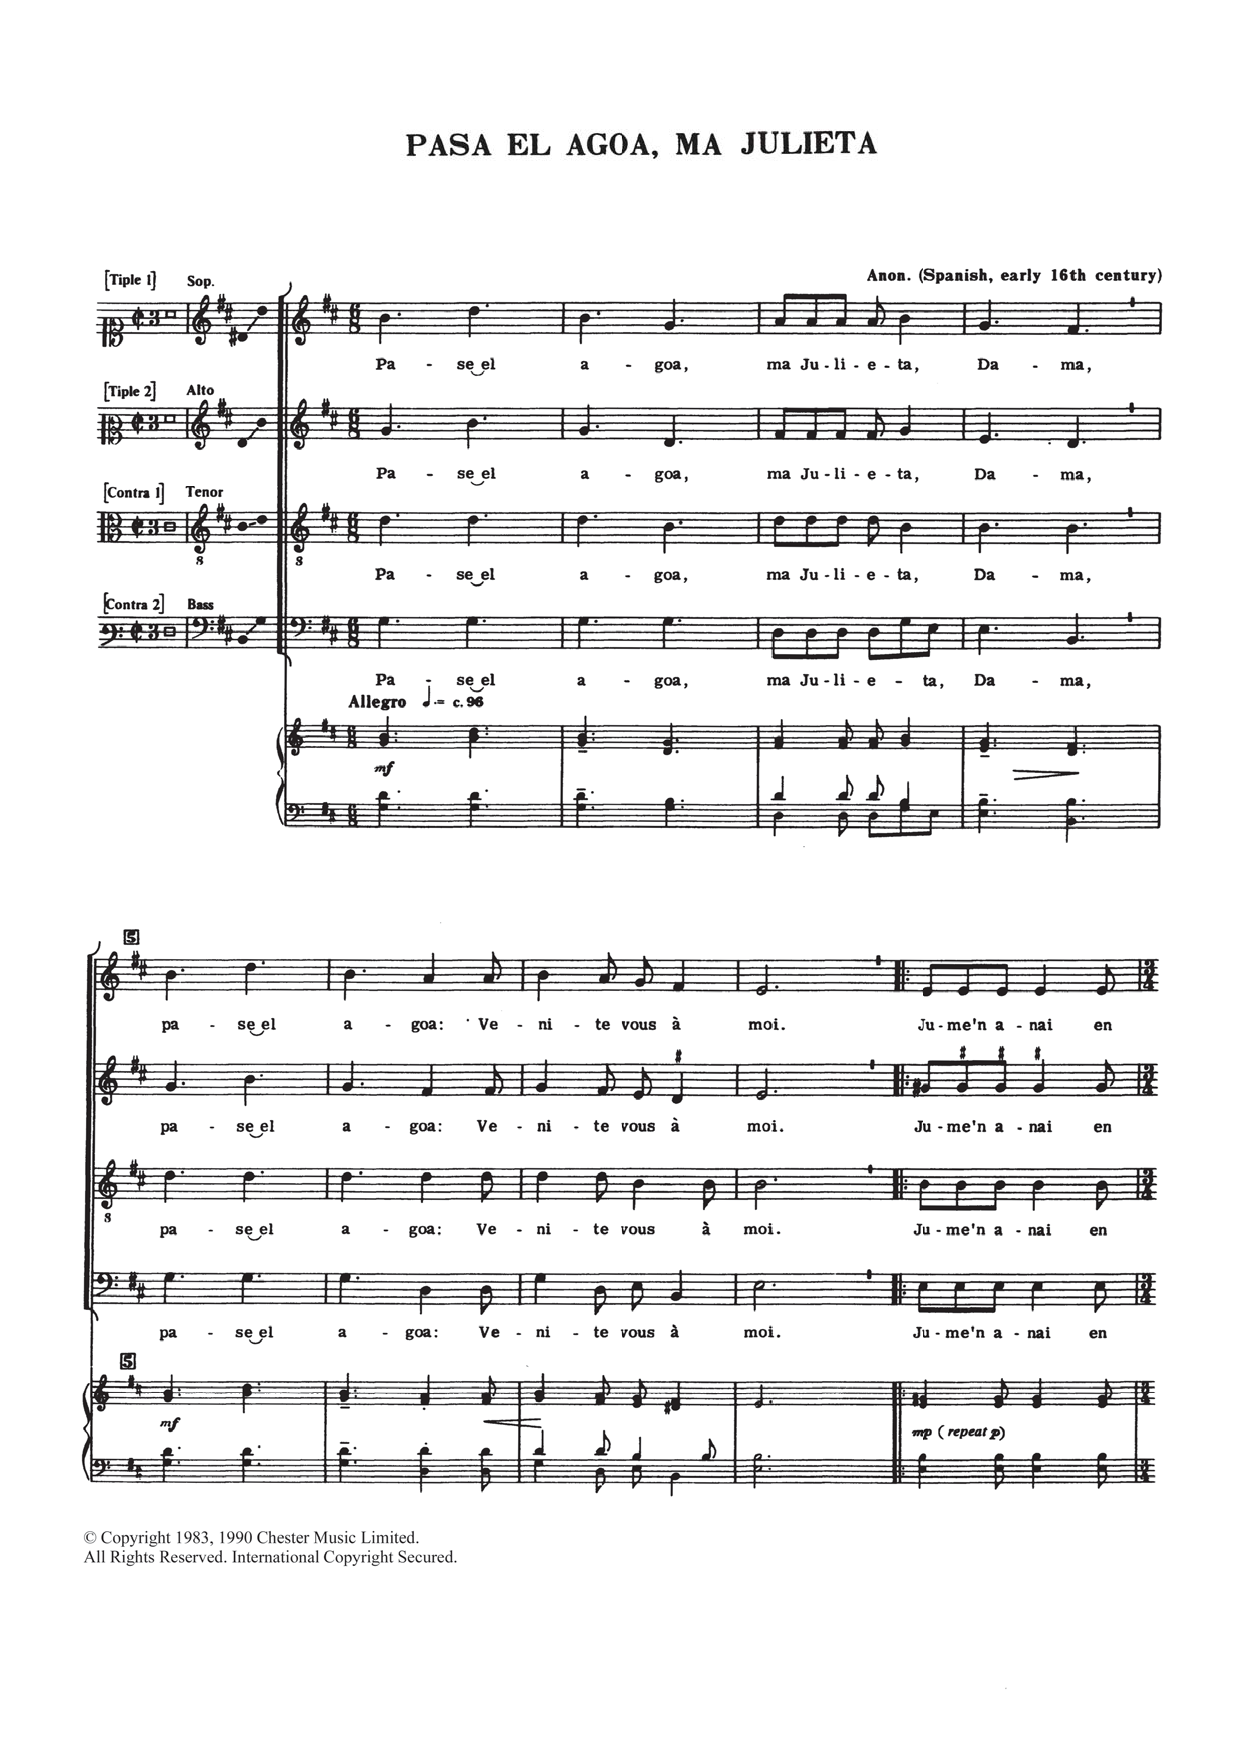 Traditional Pase El Agoa, Ma Julieta sheet music notes and chords arranged for SATB Choir